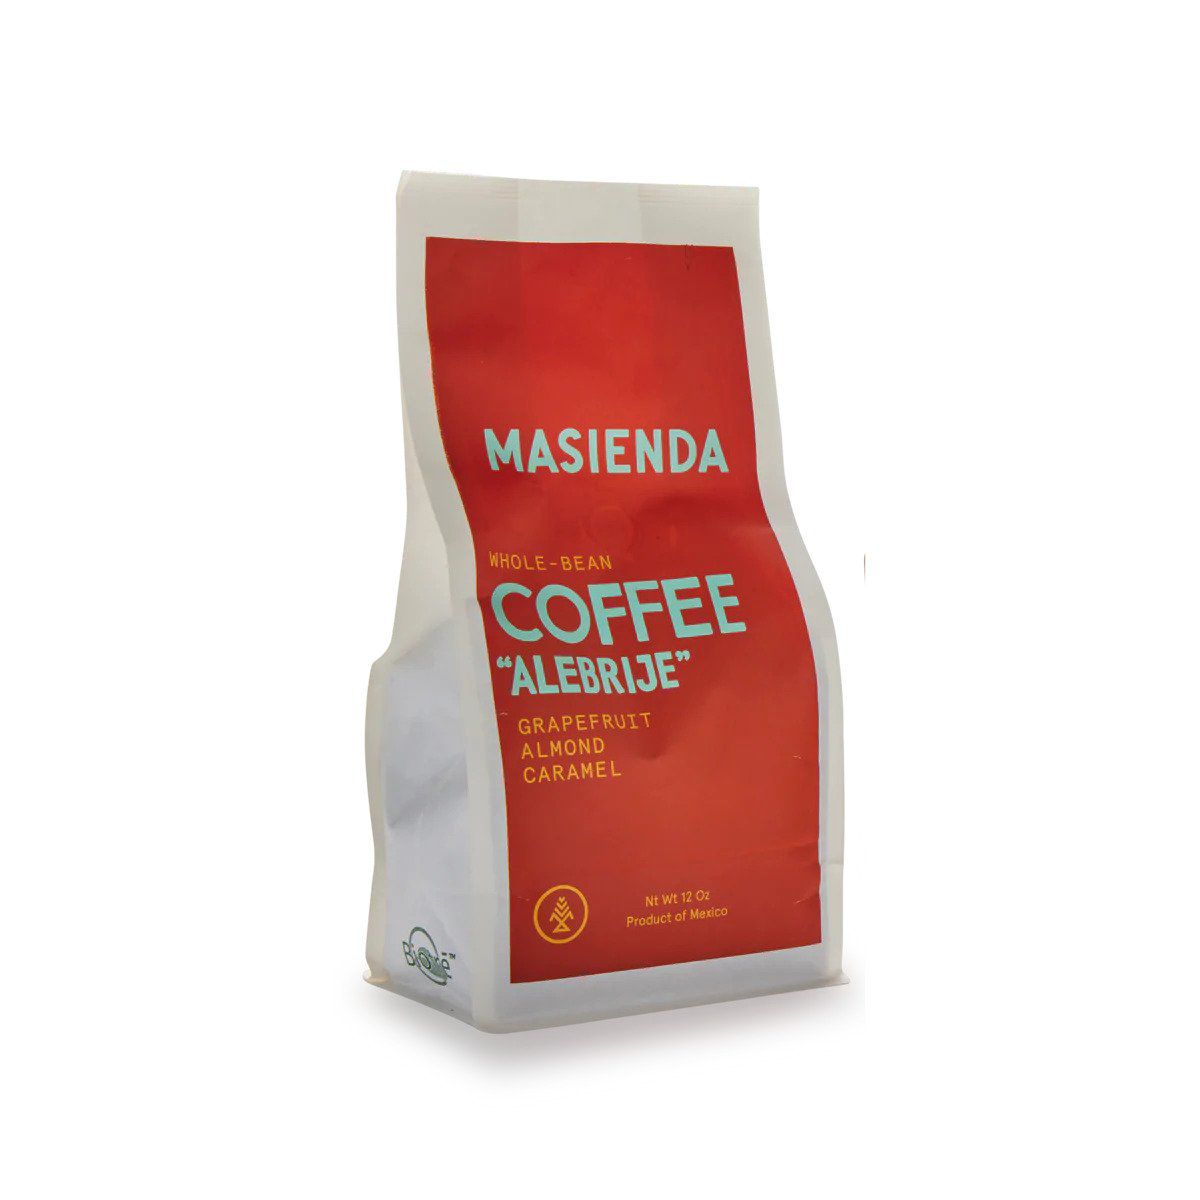 Masienda coffee